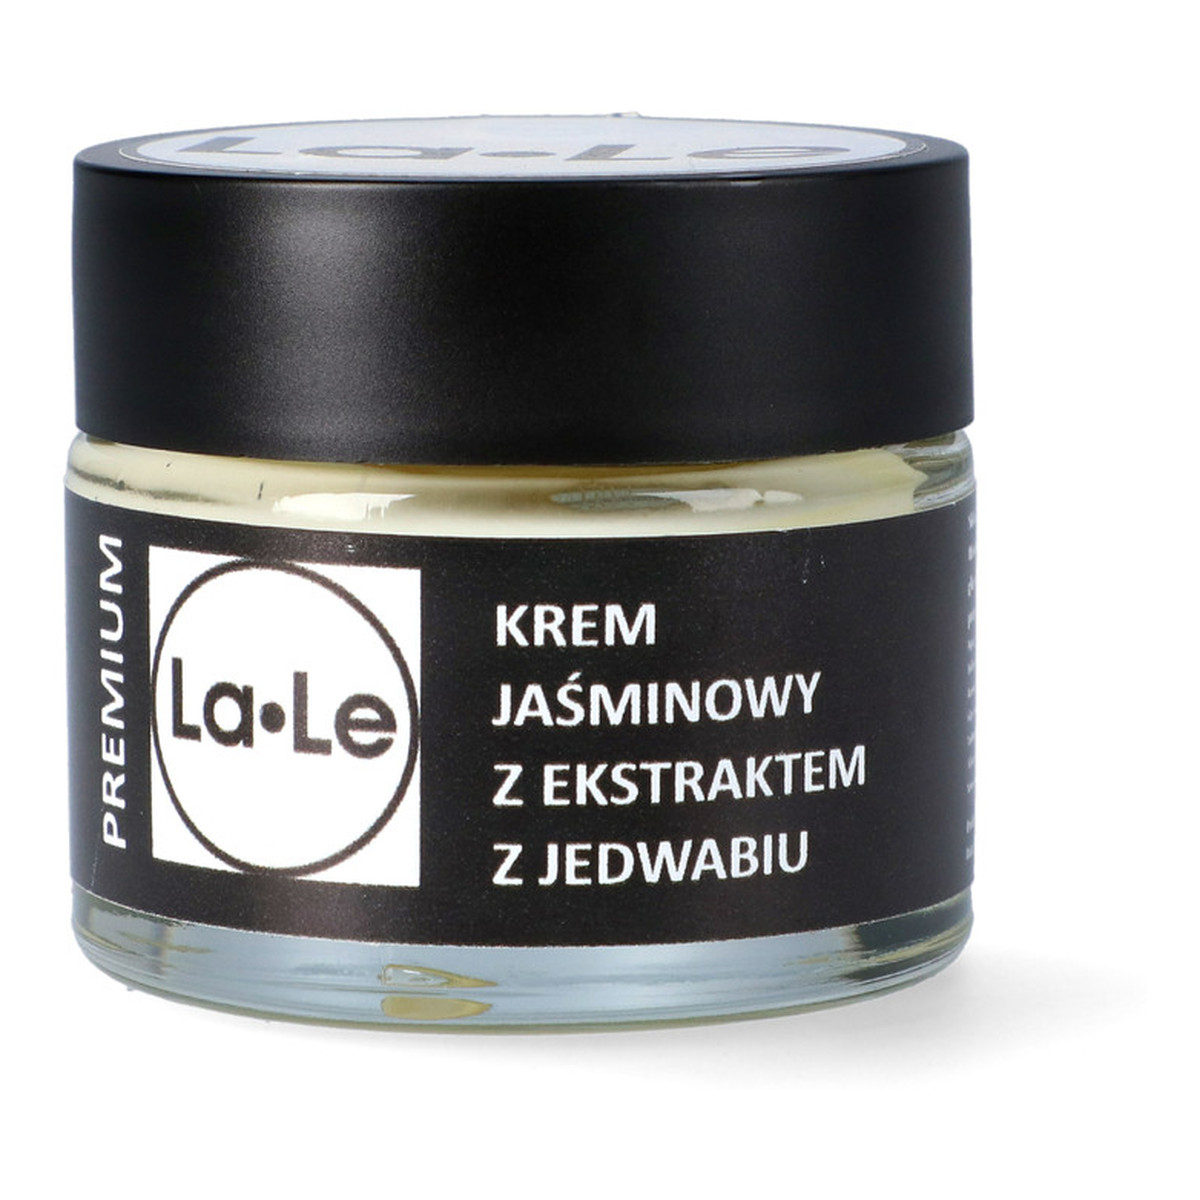 La-Le Krem jaśminowy z ekstraktem z jedwabiu 60ml